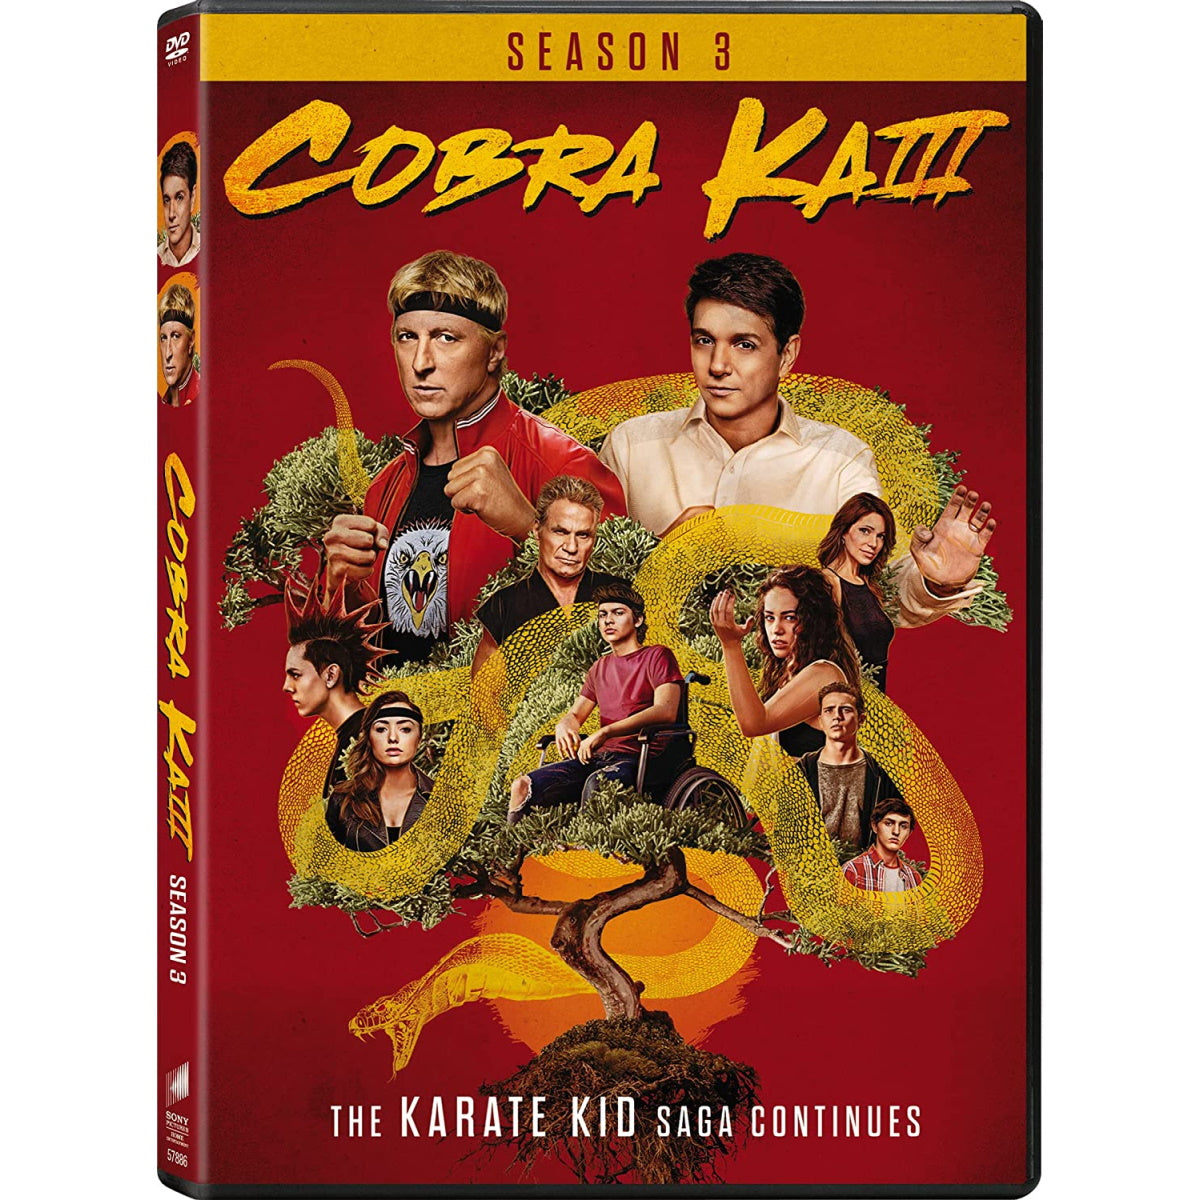 Análise: Cobra Kai: The Karate Kid Saga Continues (Multi) expande